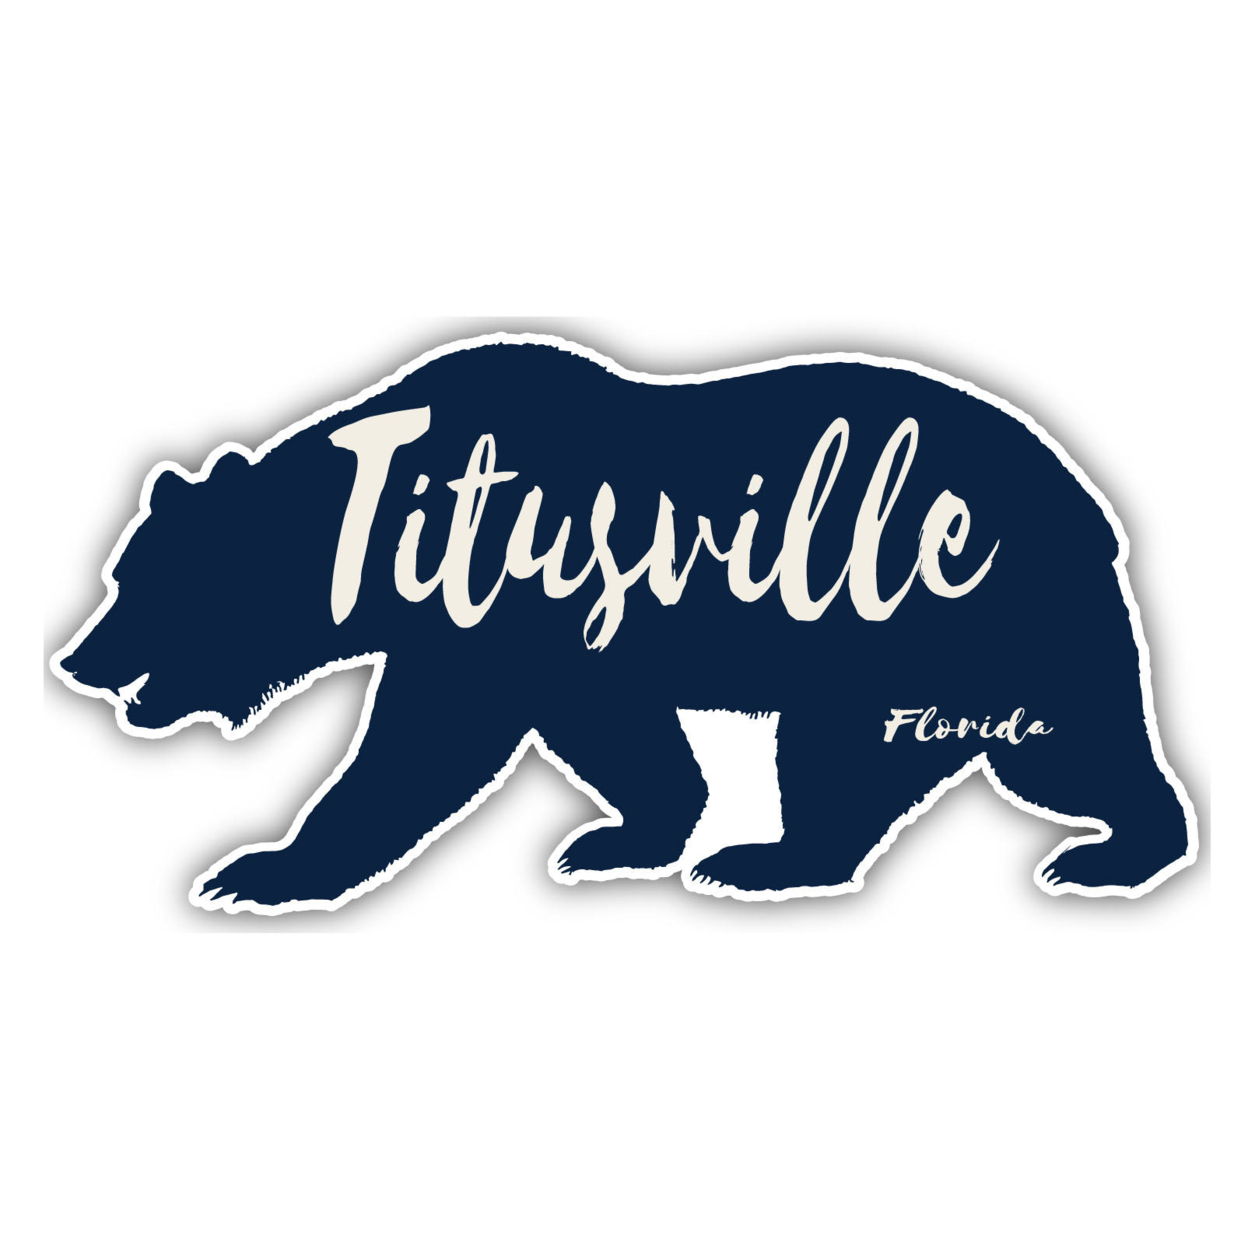 Titusville Florida Souvenir Decorative Stickers (Choose Theme And Size) - Single Unit, 4-Inch, Tent